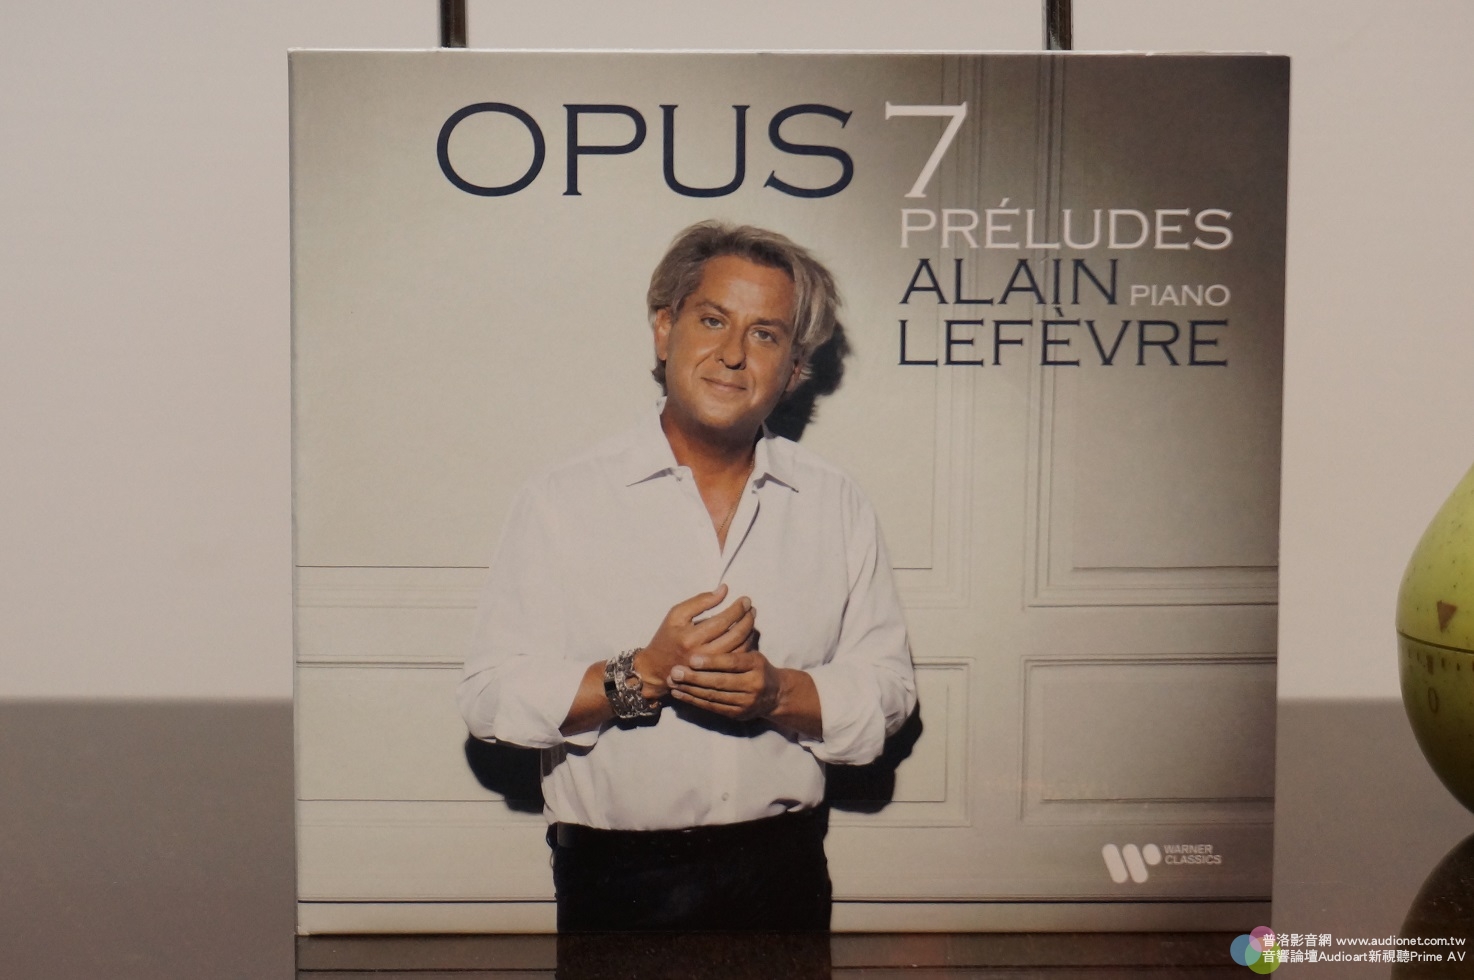 Alain Lefevre Opus 7 Preludes以鋼琴說七段故事，優美旋律感人至深